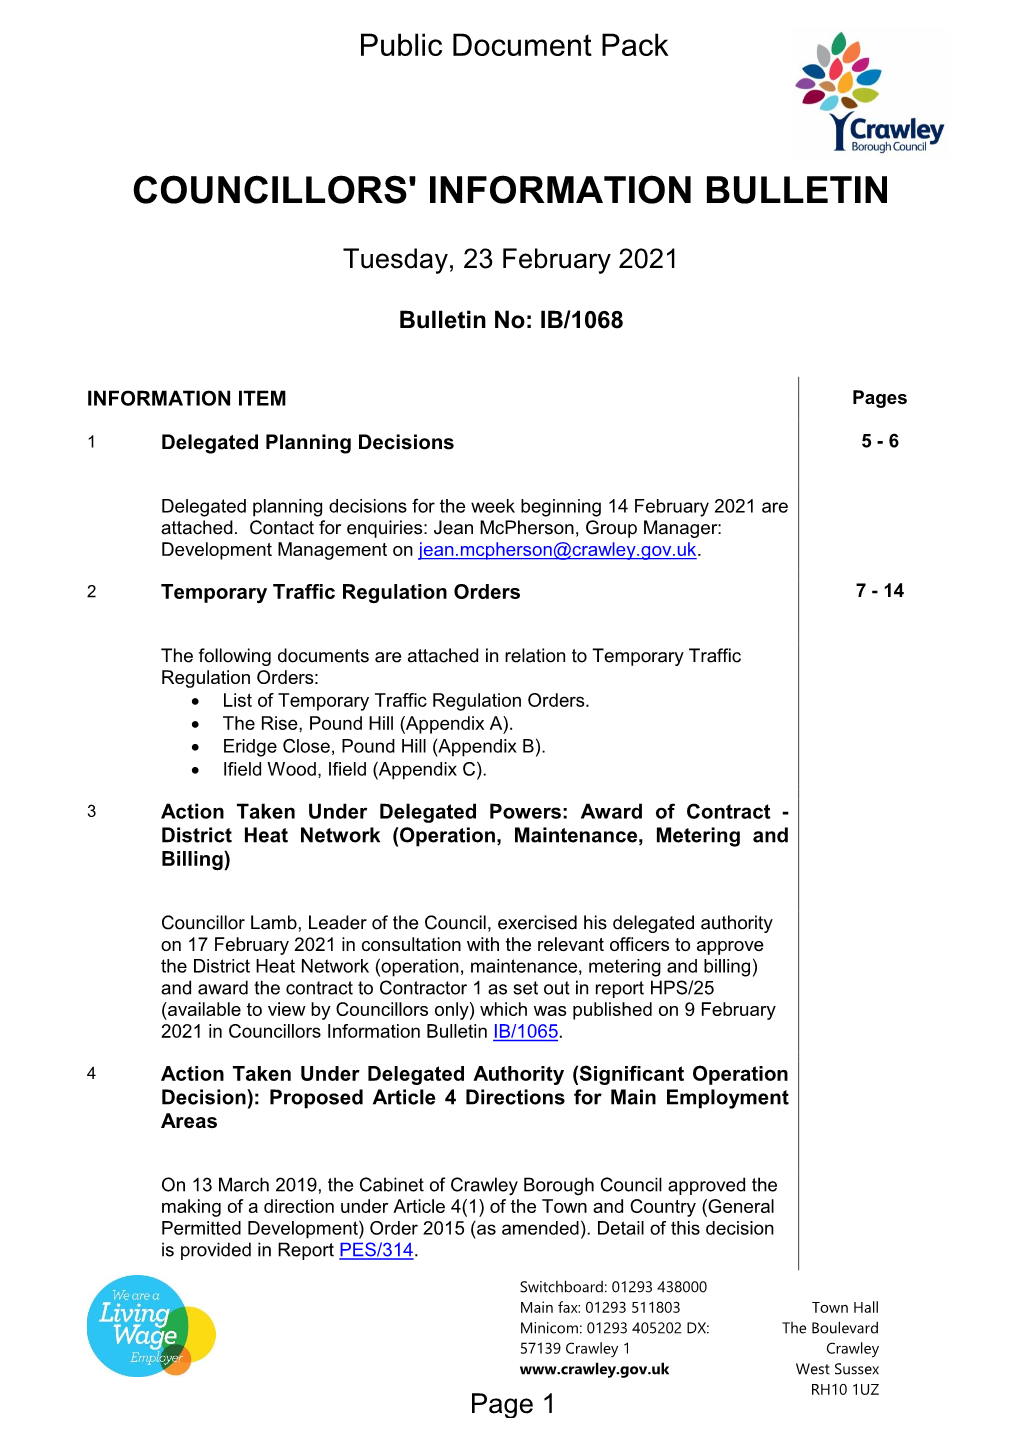 (Public Pack)Agenda Document for Councillors' Information Bulletin